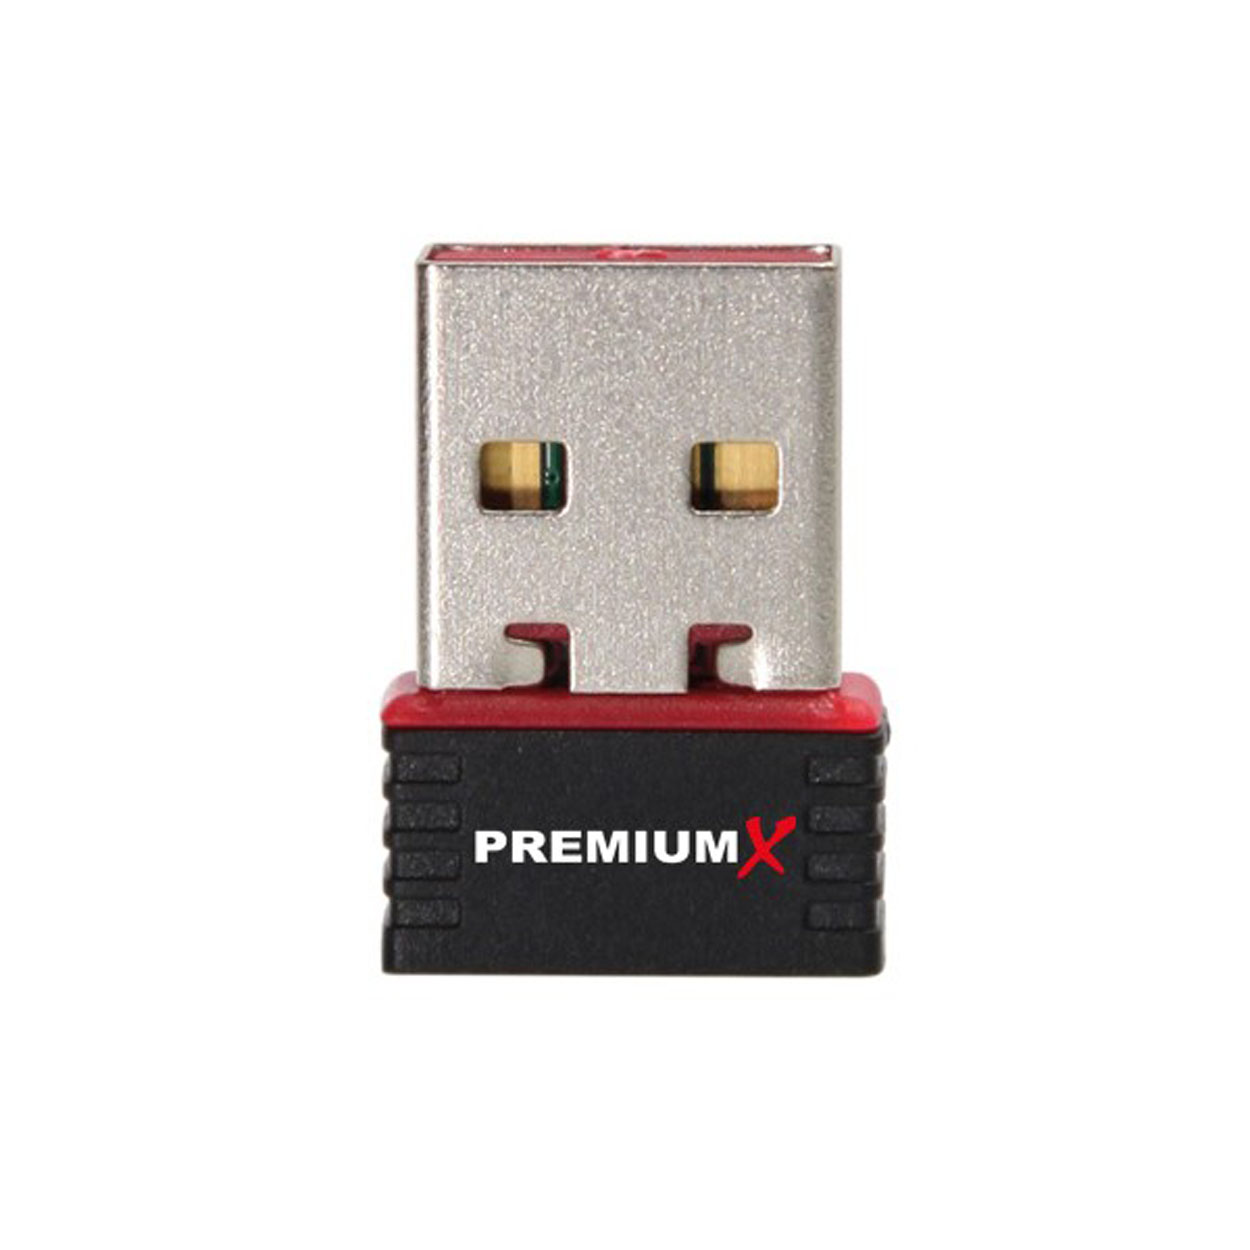 PREMIUMX PX150 MINI W-Lan USB-Micro-Pen Adapter Wireless Mbit Schwarz WLAN 150 WLAN-Adapter, Stick N